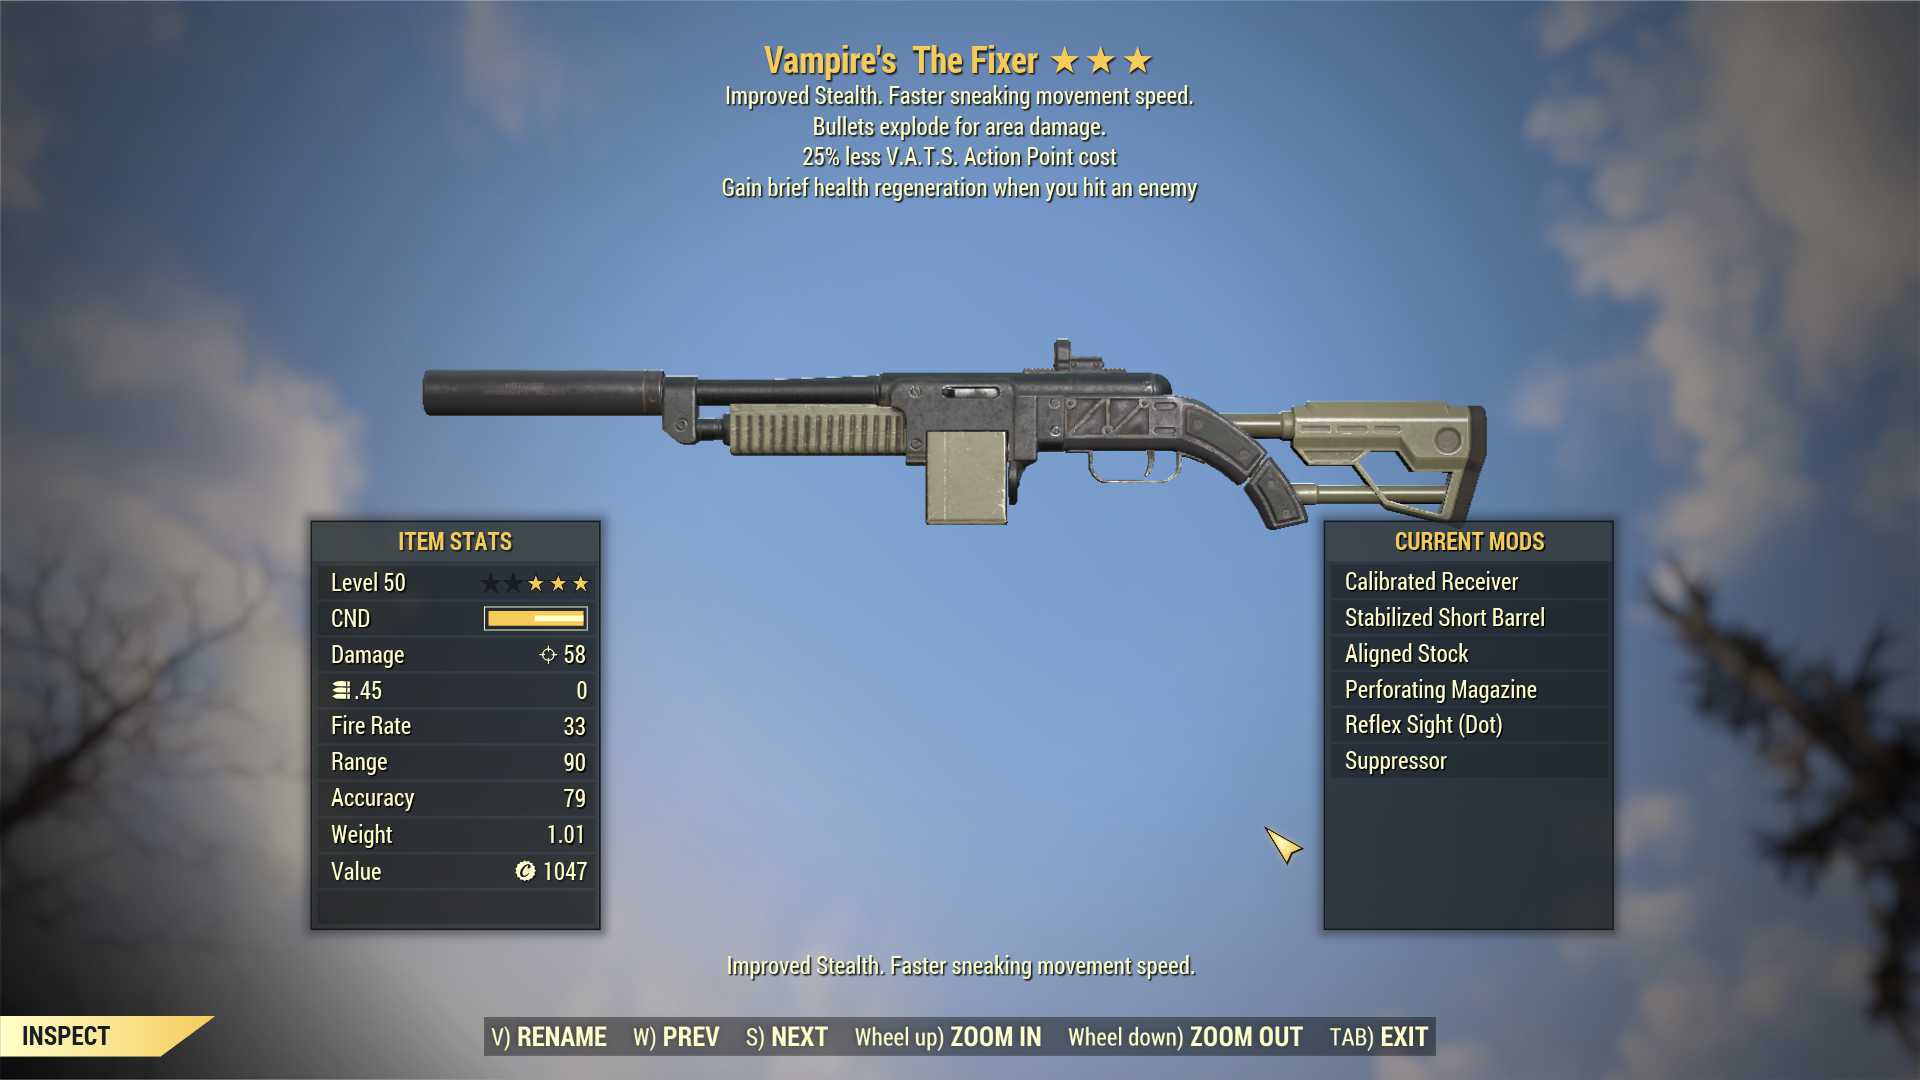 Vampire's Explosive The Fixer (25% less VATS AP cost)